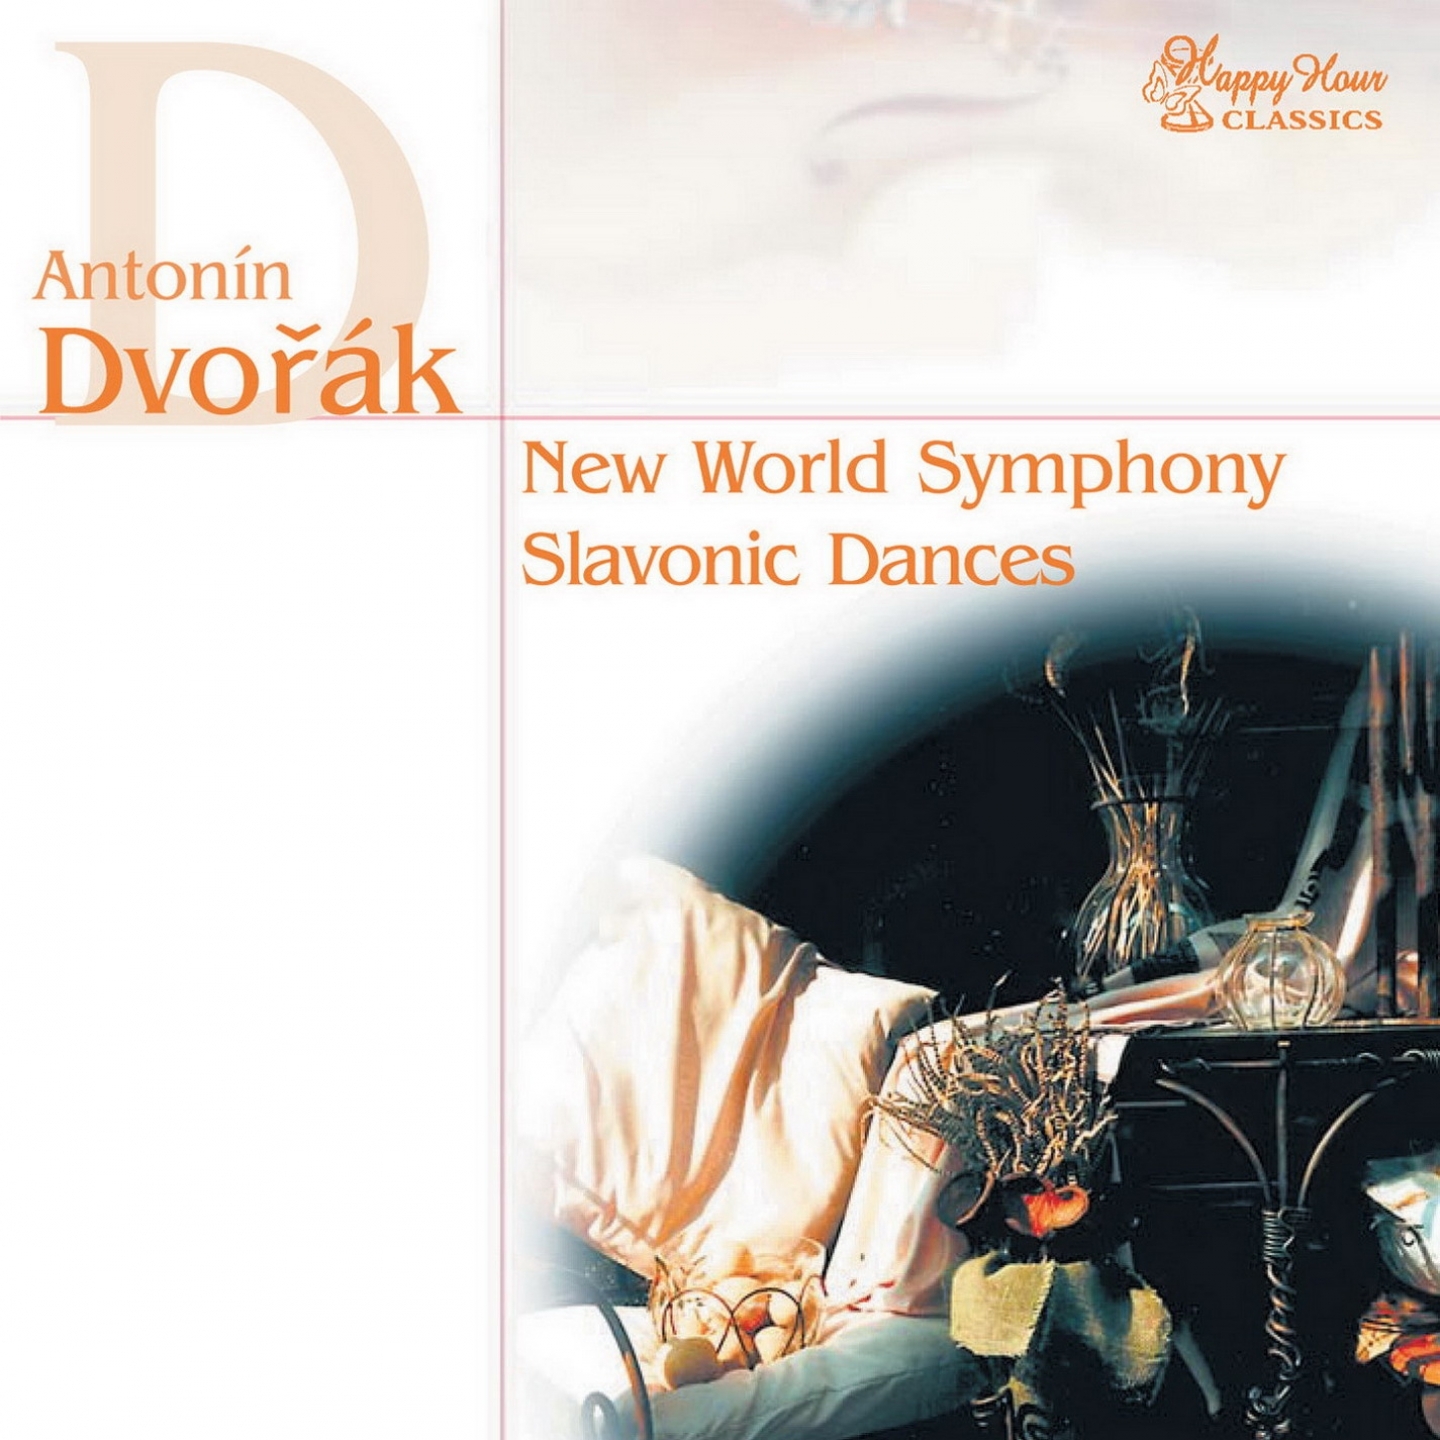 Antonin Dvorak: New World Symphony, Slavonic Dances